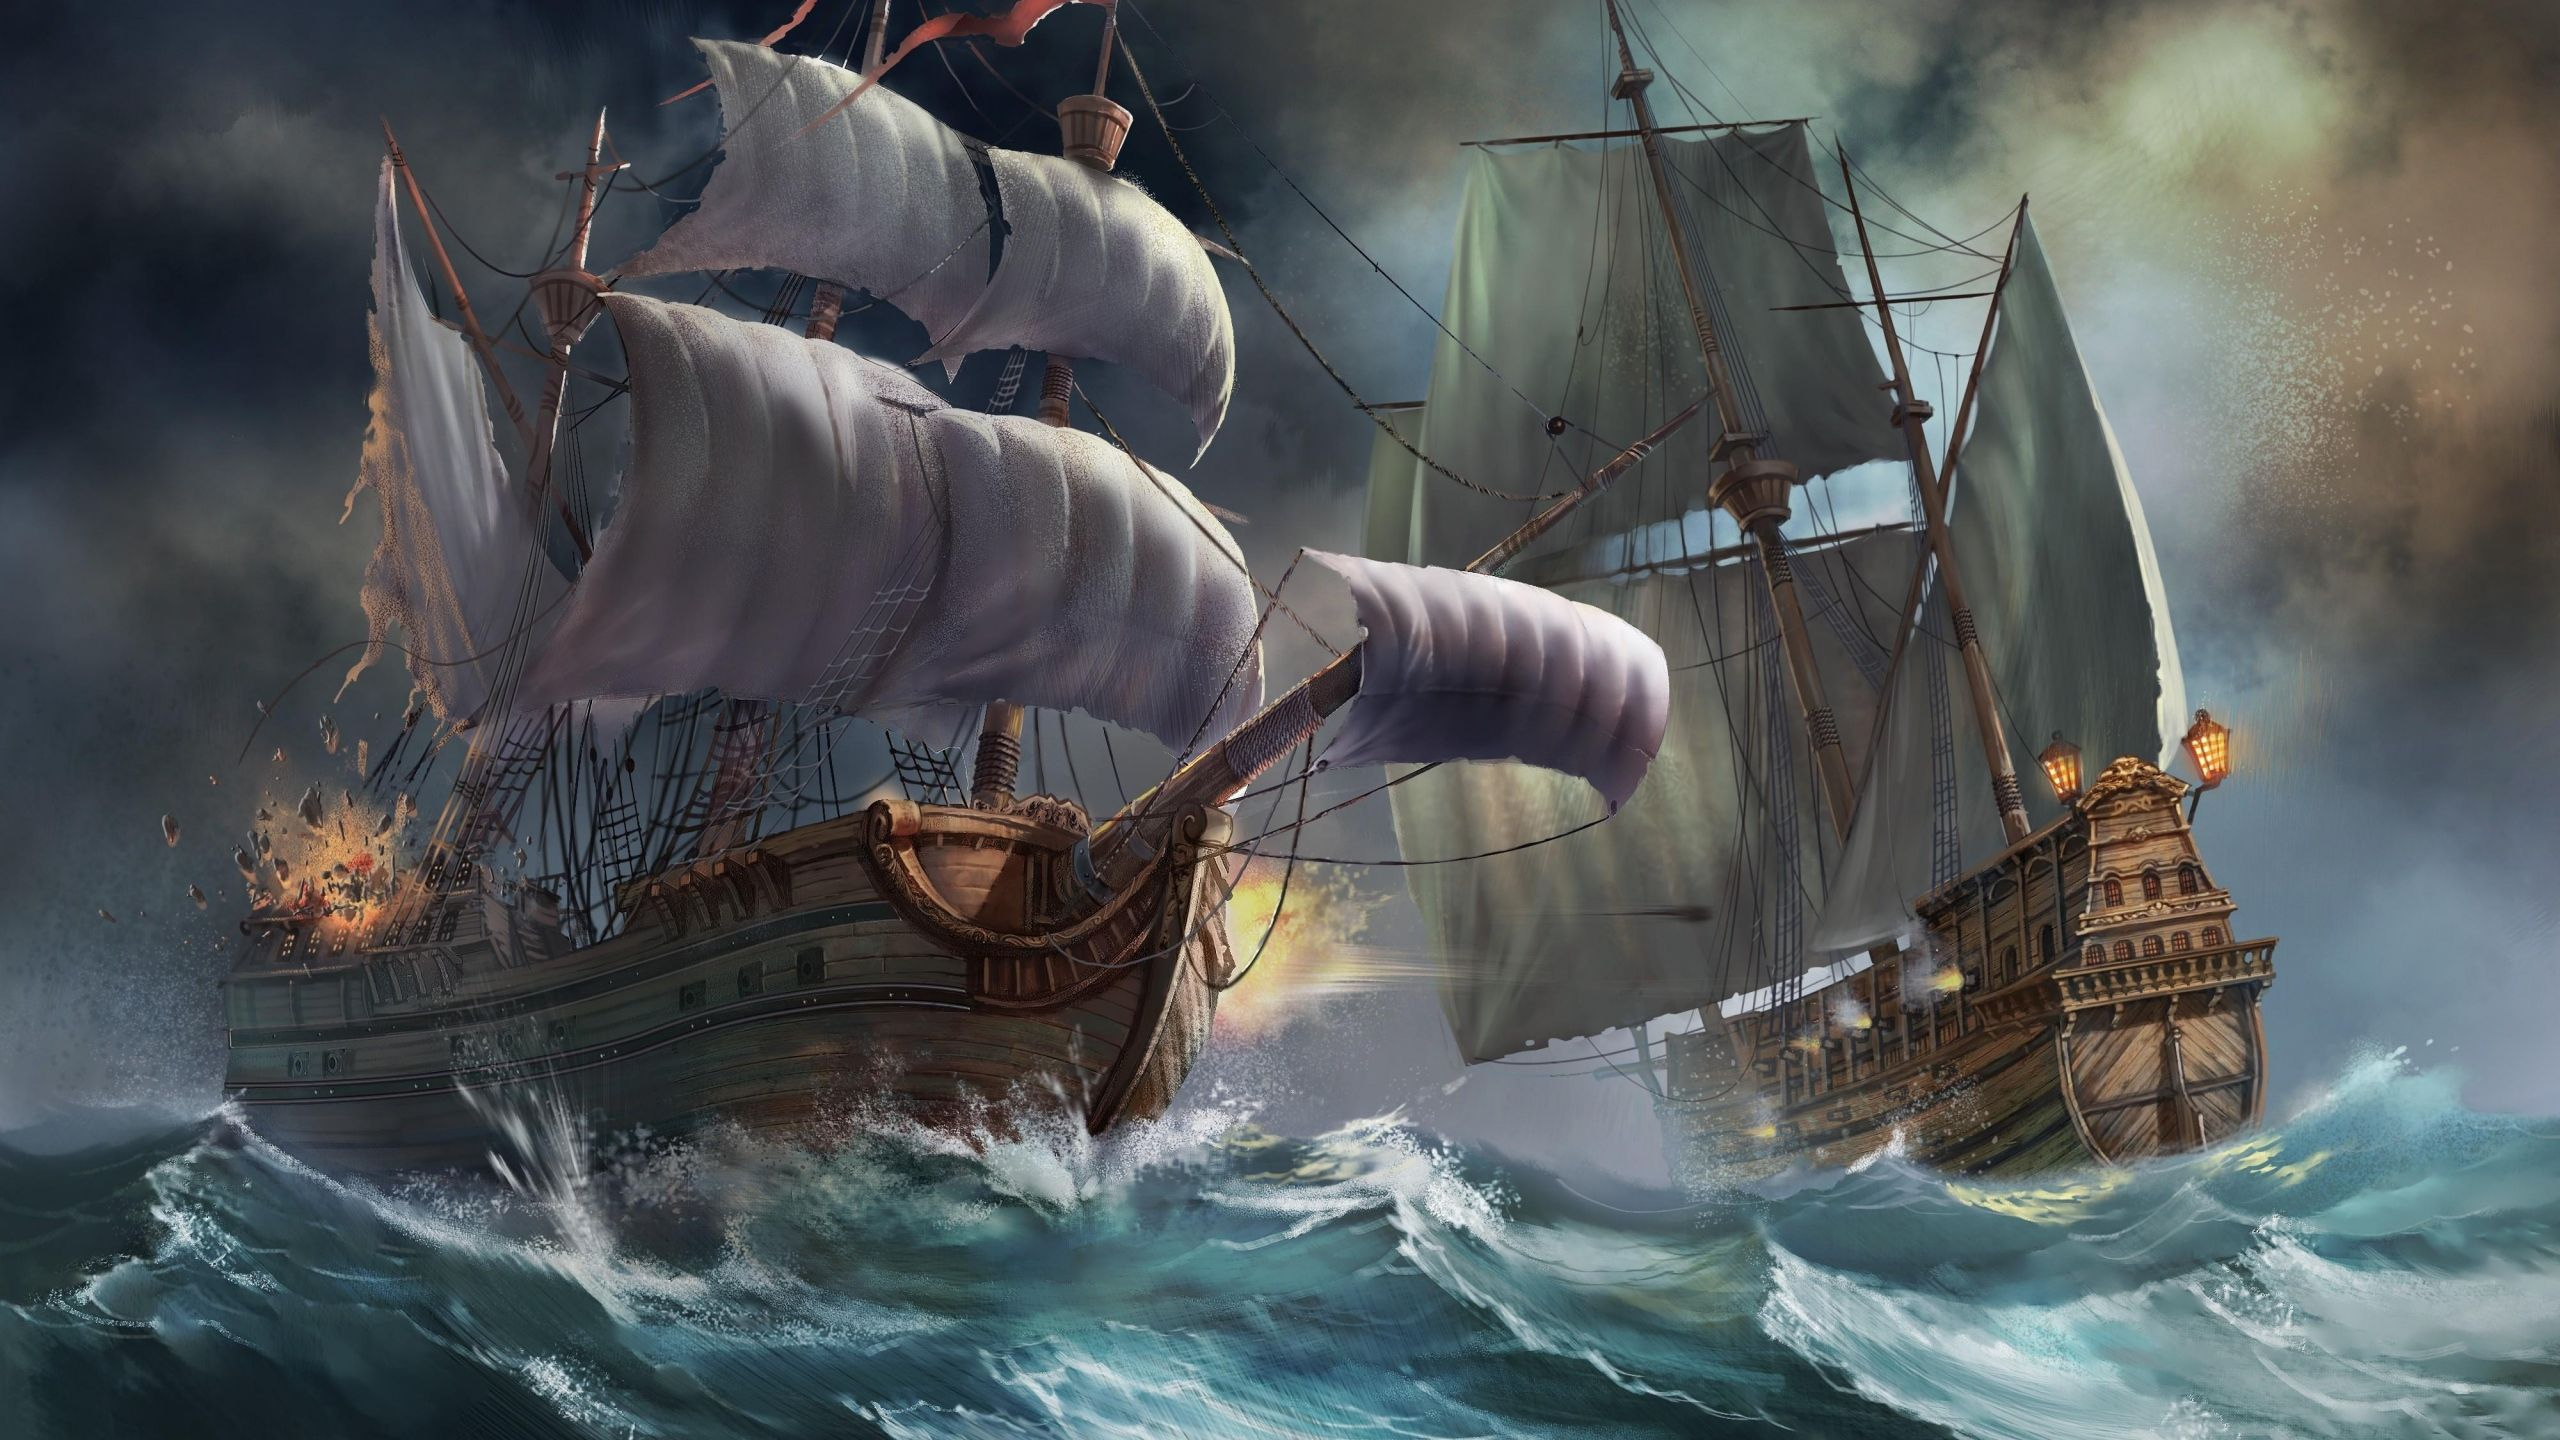 2560x1440 Download Wallpaper Ships, Sea, Storm, Explosion Mac iMac 27 HD Background | Sailing ships, Sailing, Boat